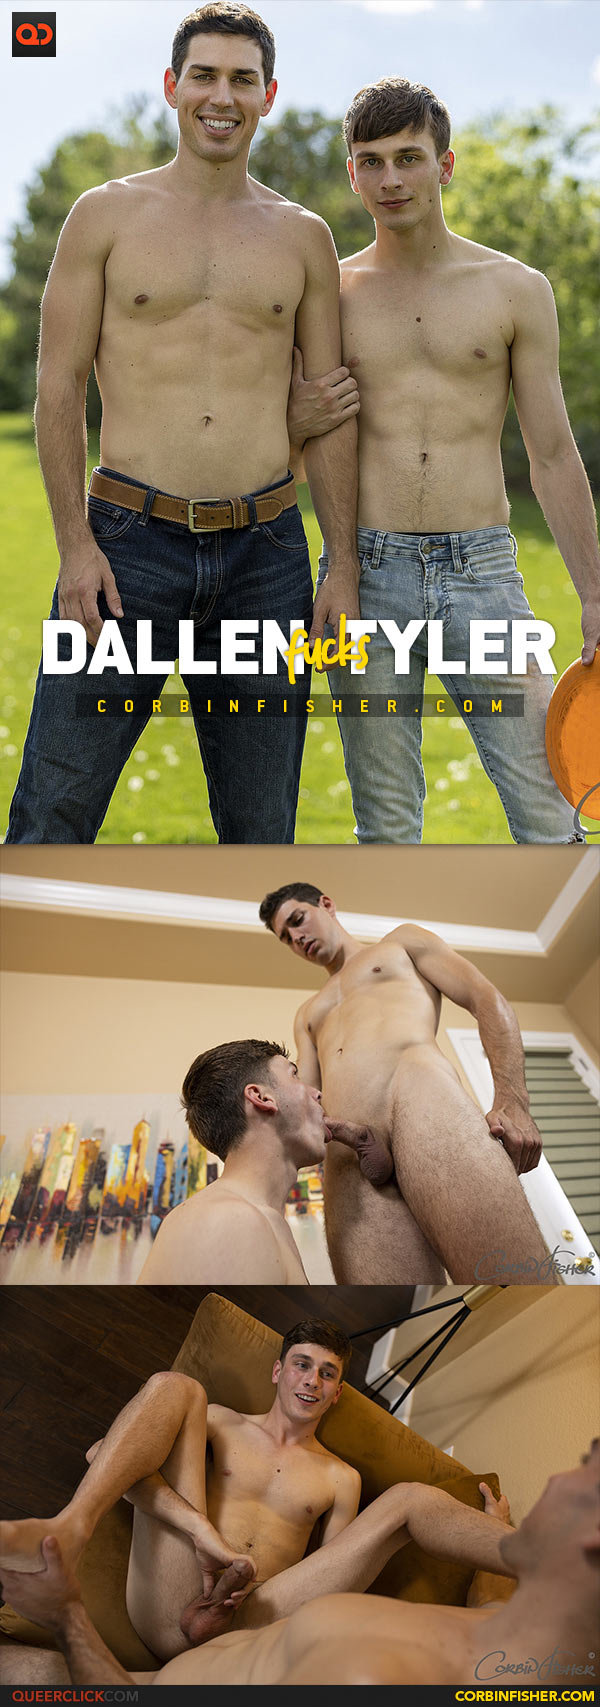 Corbin Fisher: Dallen Fucks Tyler